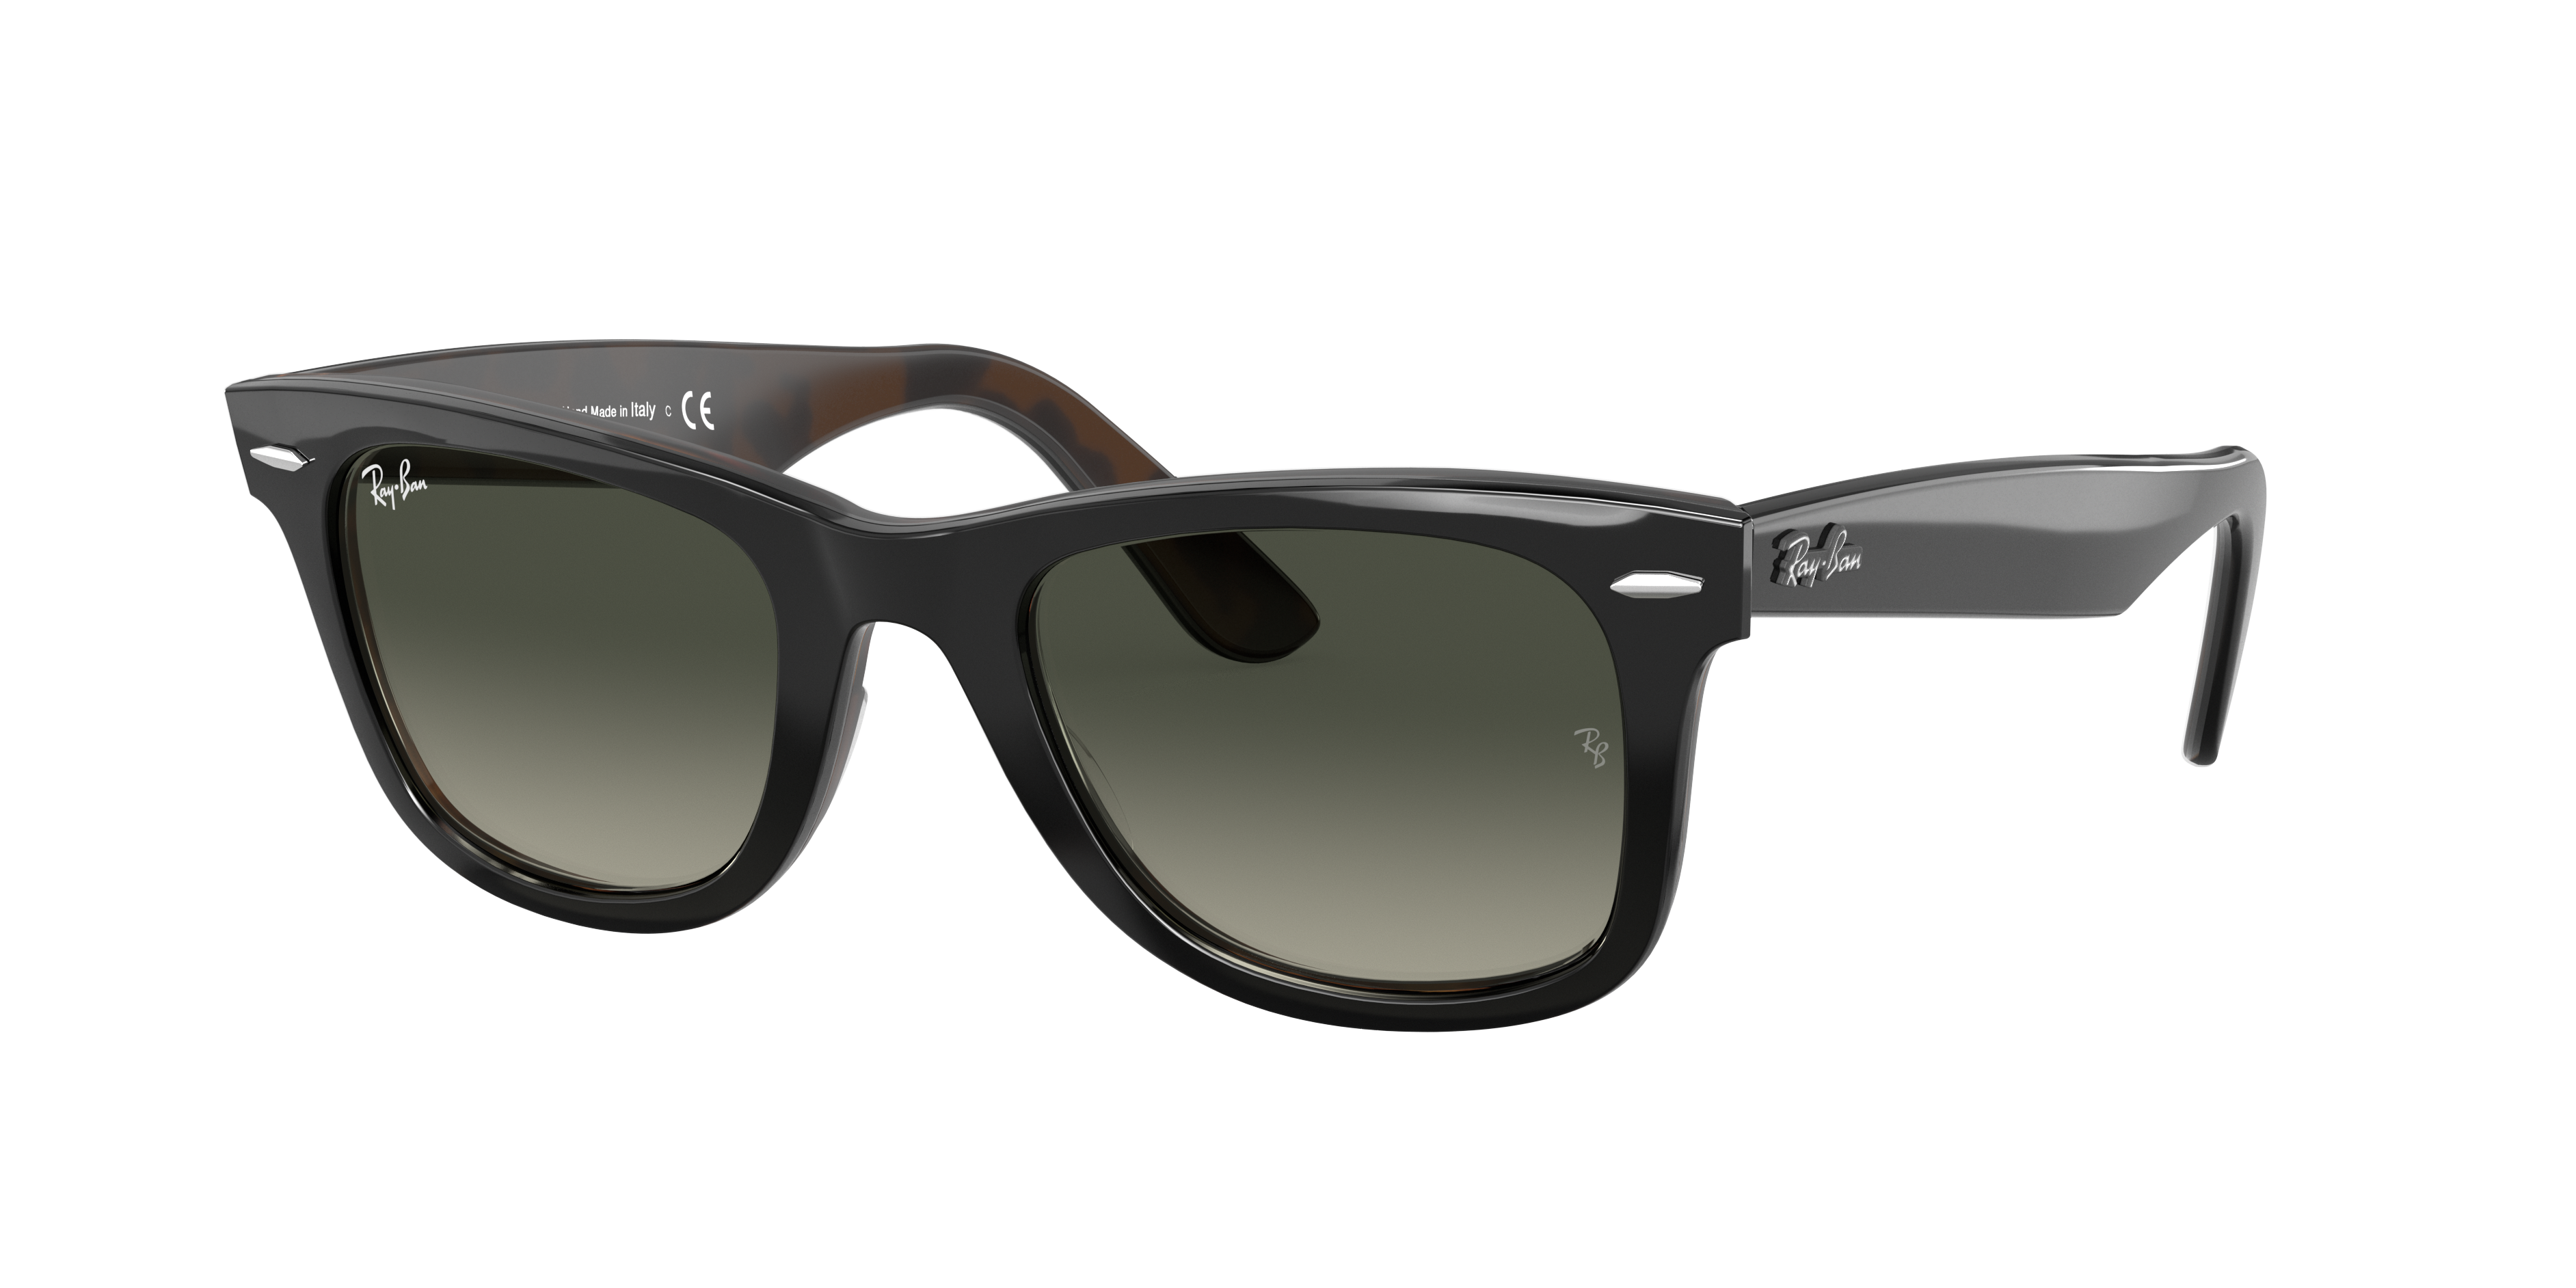 ray ban white frame sunglasses